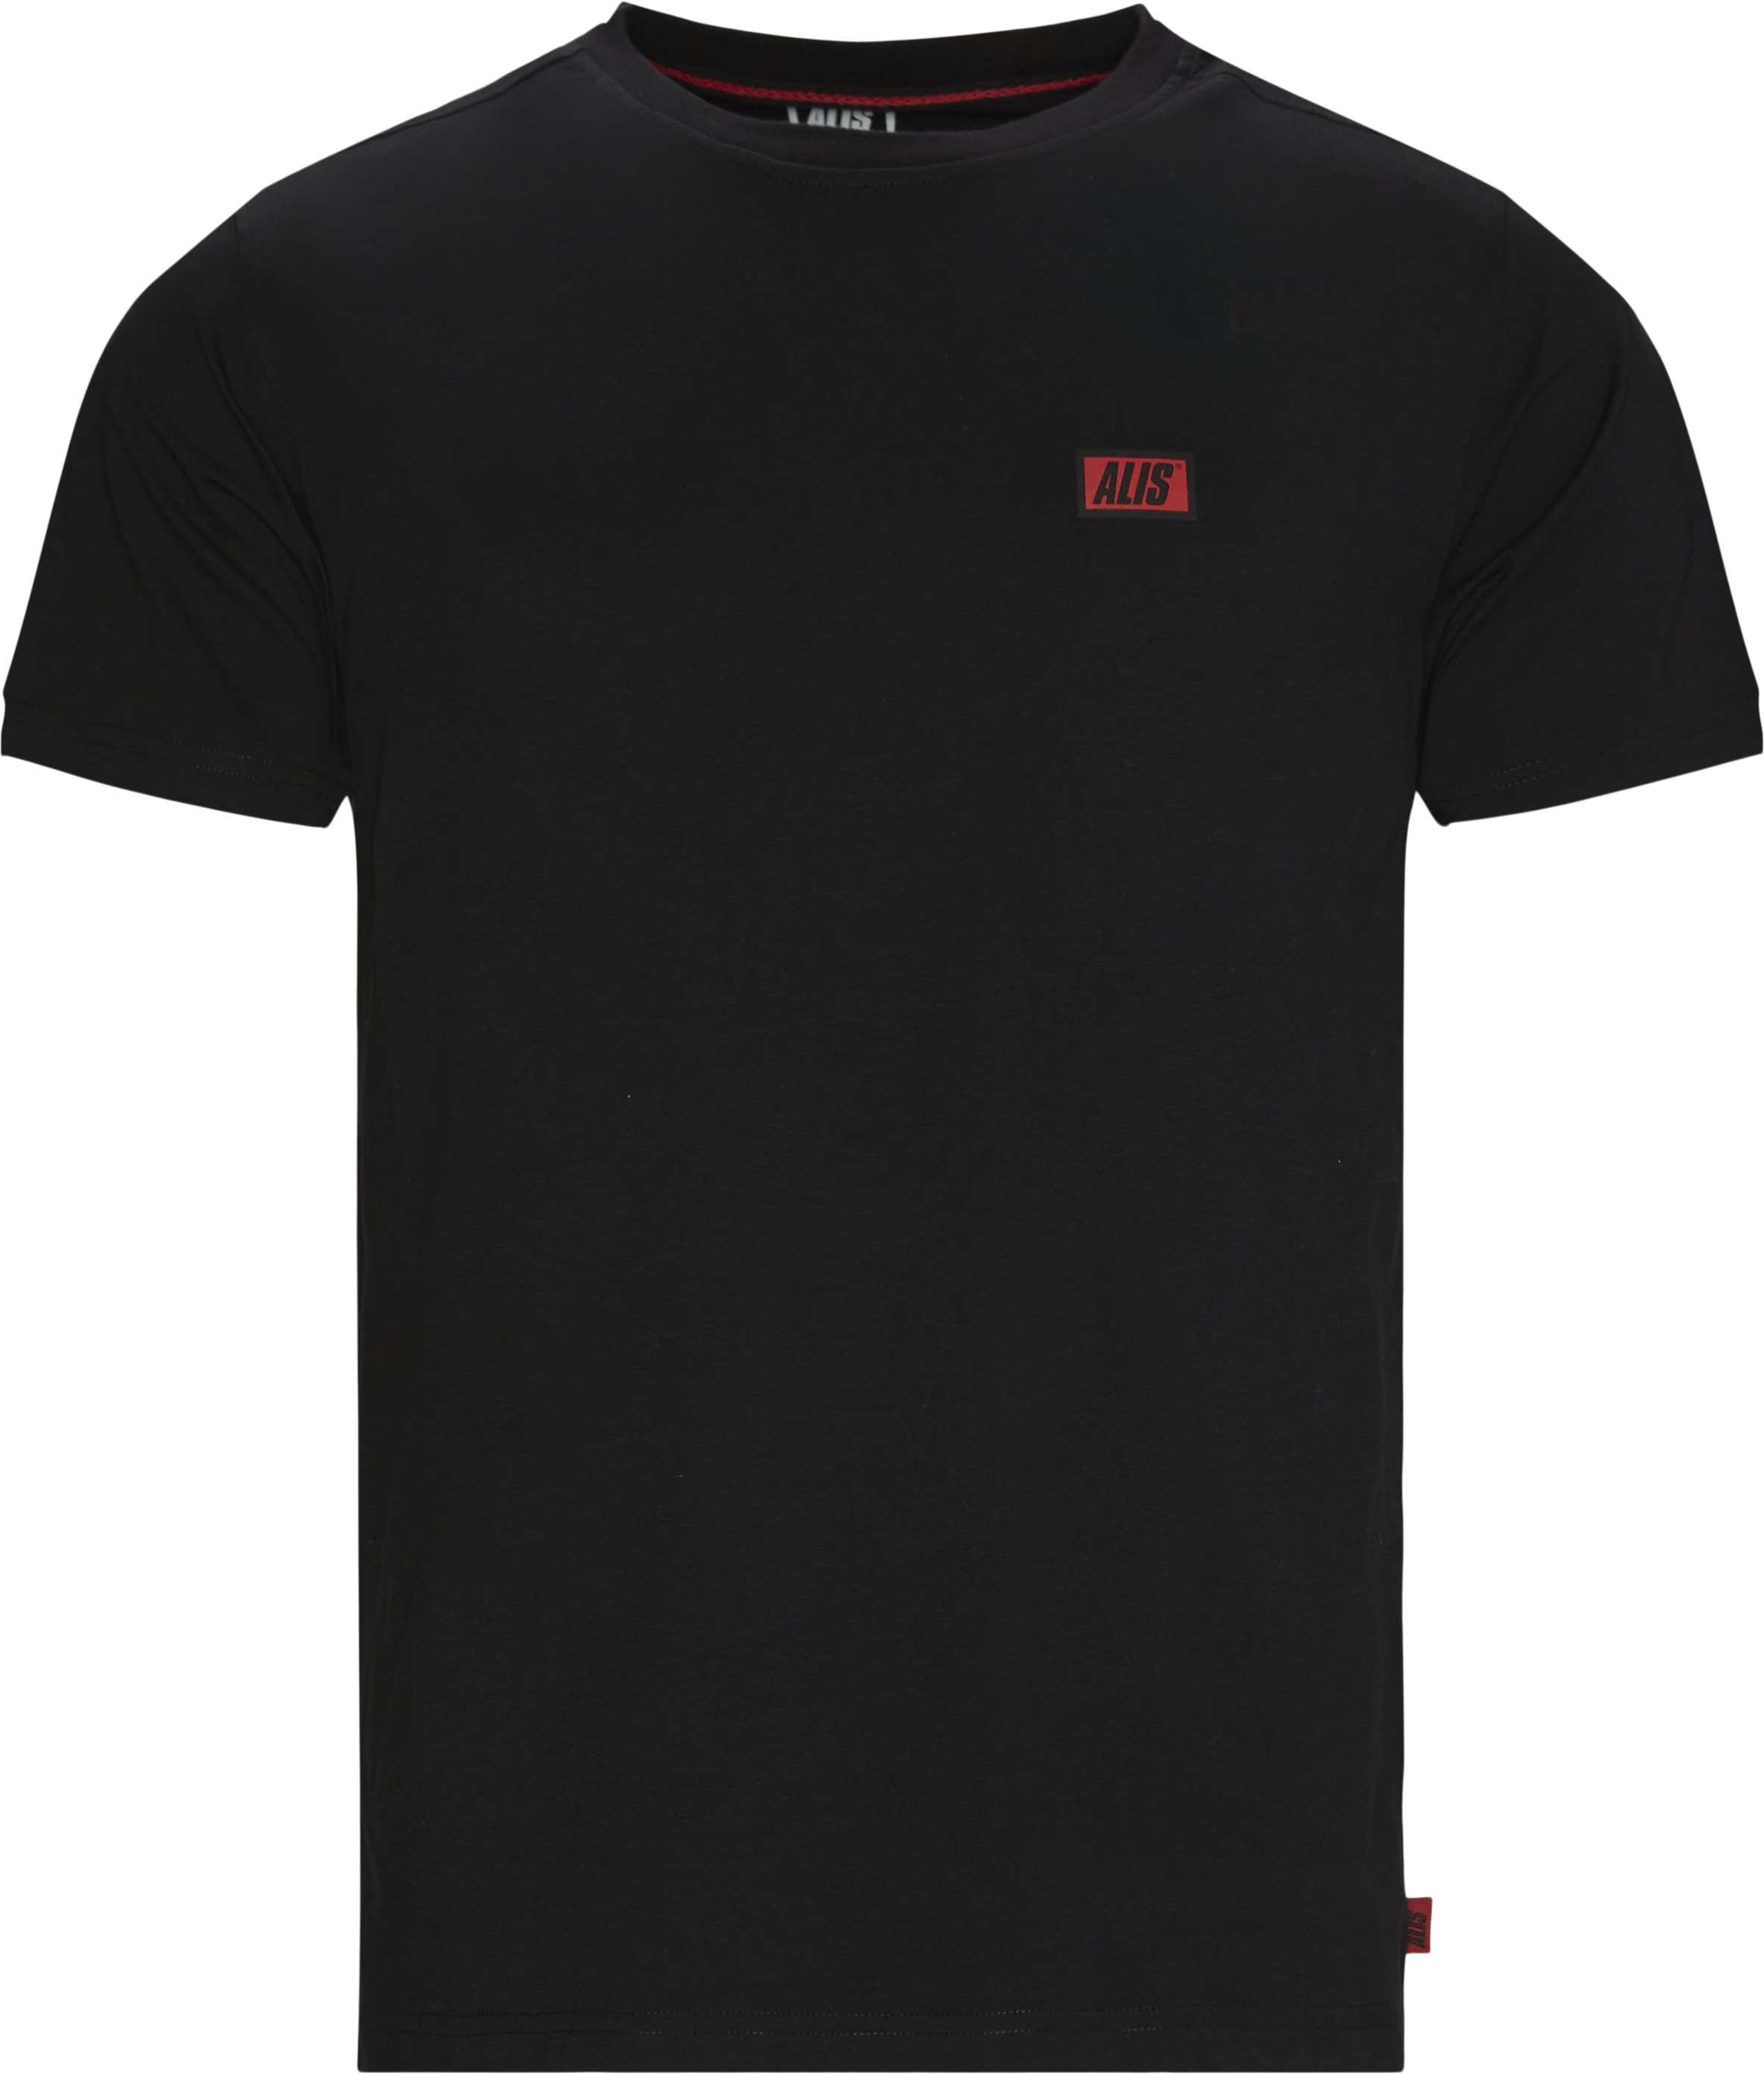 Am3001 Tee - T-shirts - Regular fit - Sort